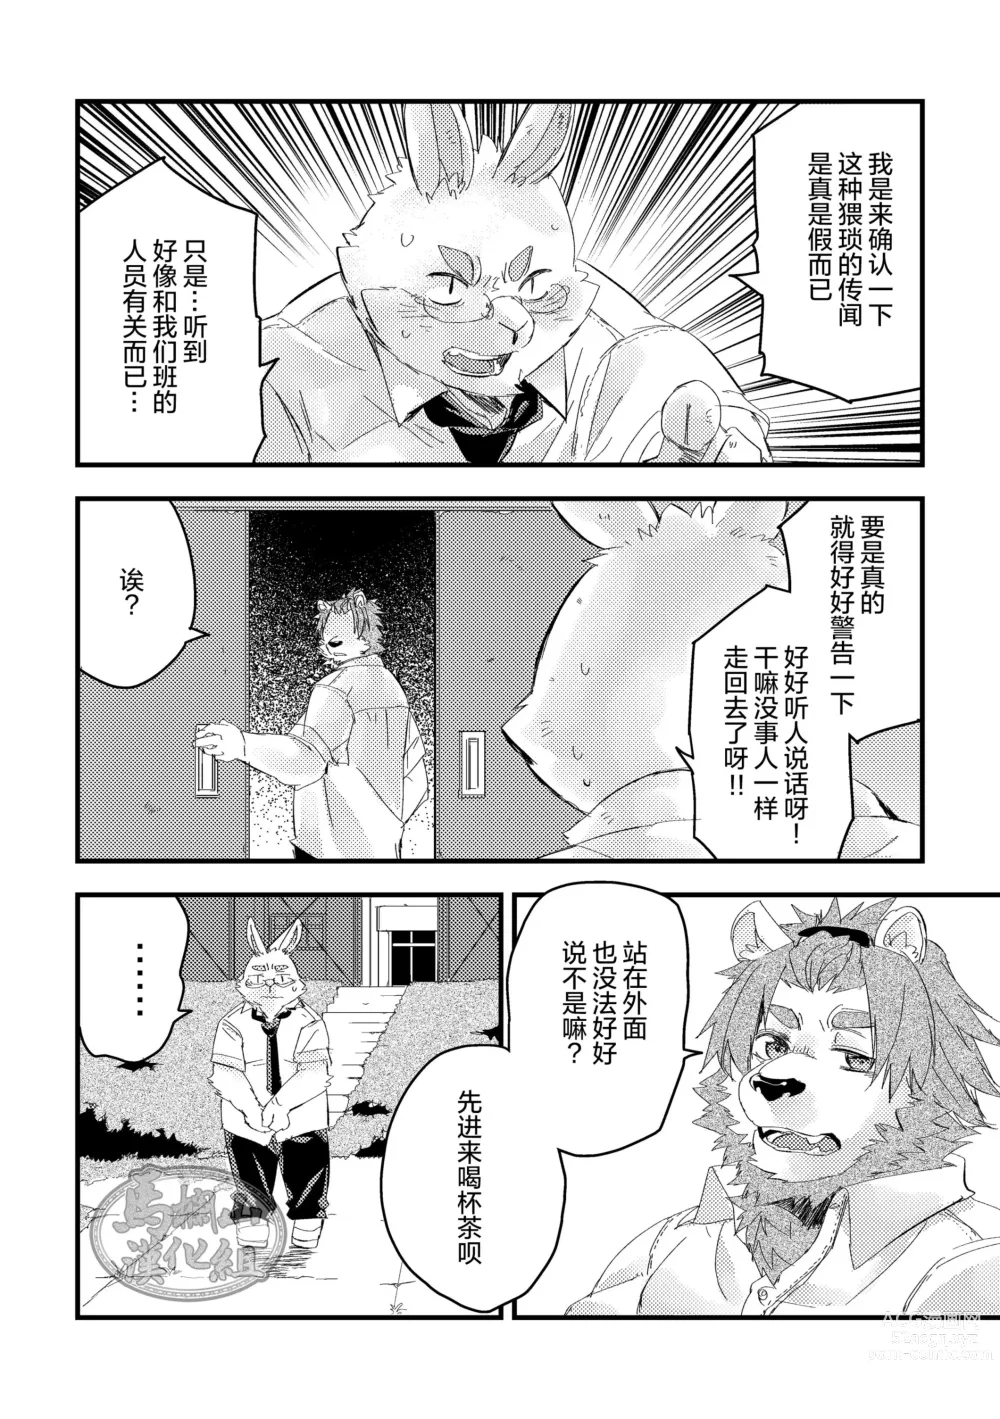 Page 9 of manga 獅子は兎を狩るのにも